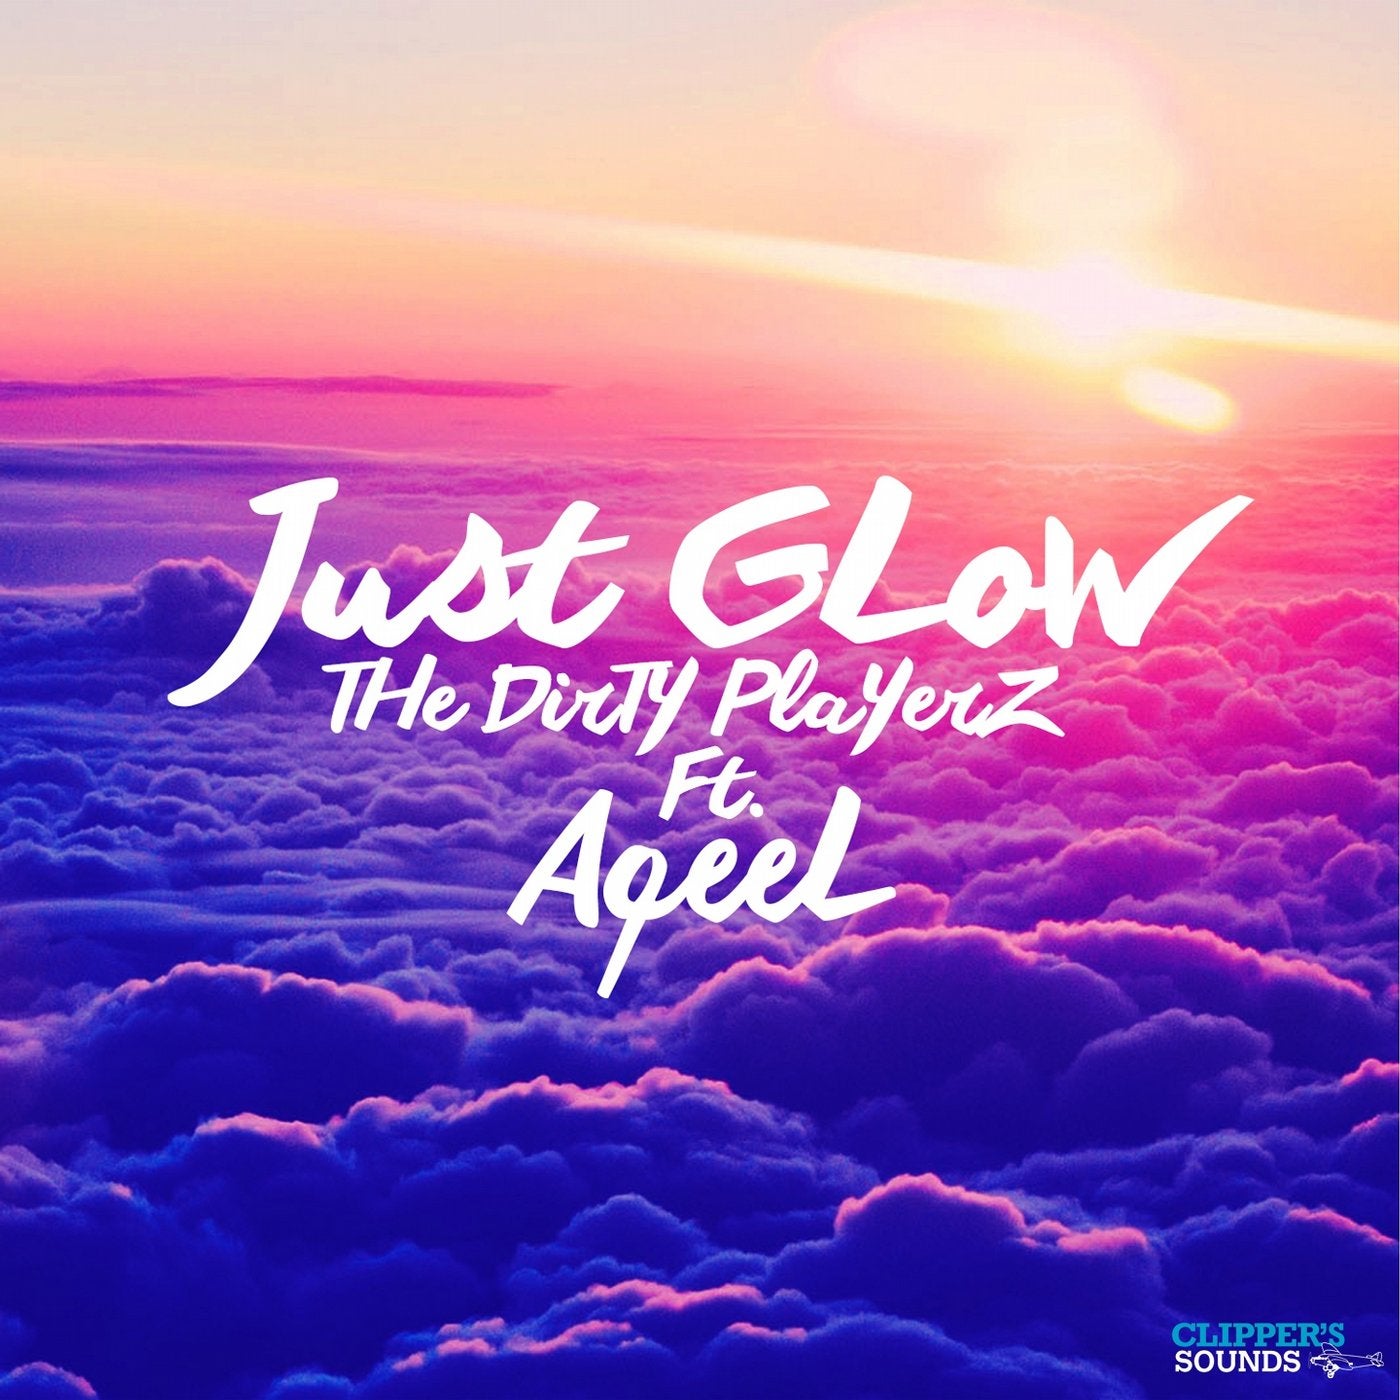 Just Glow (feat. Aqeel)